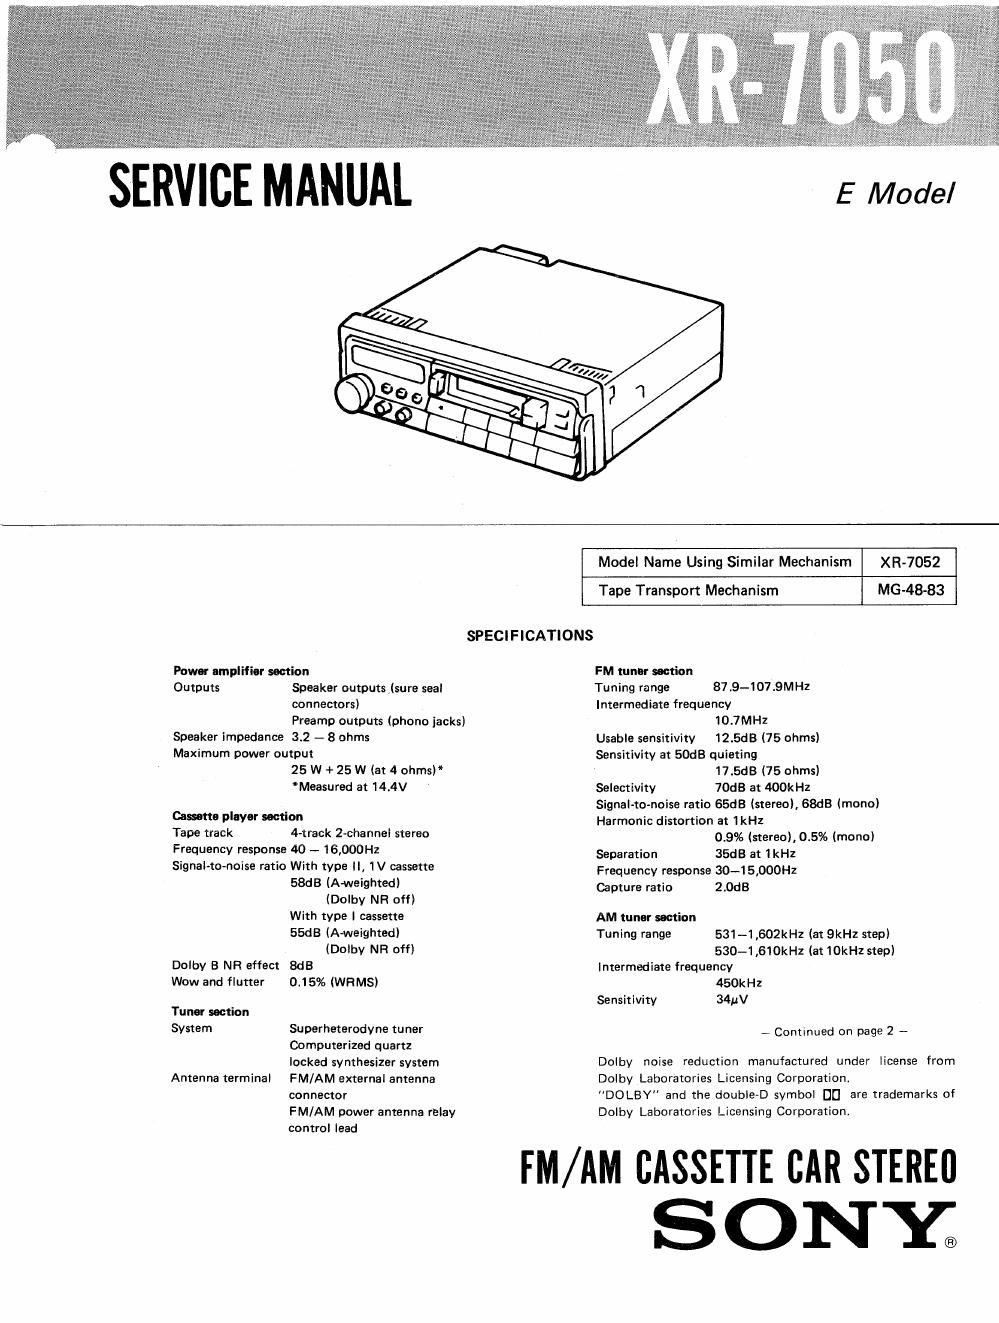 sony xr 7050 service manual